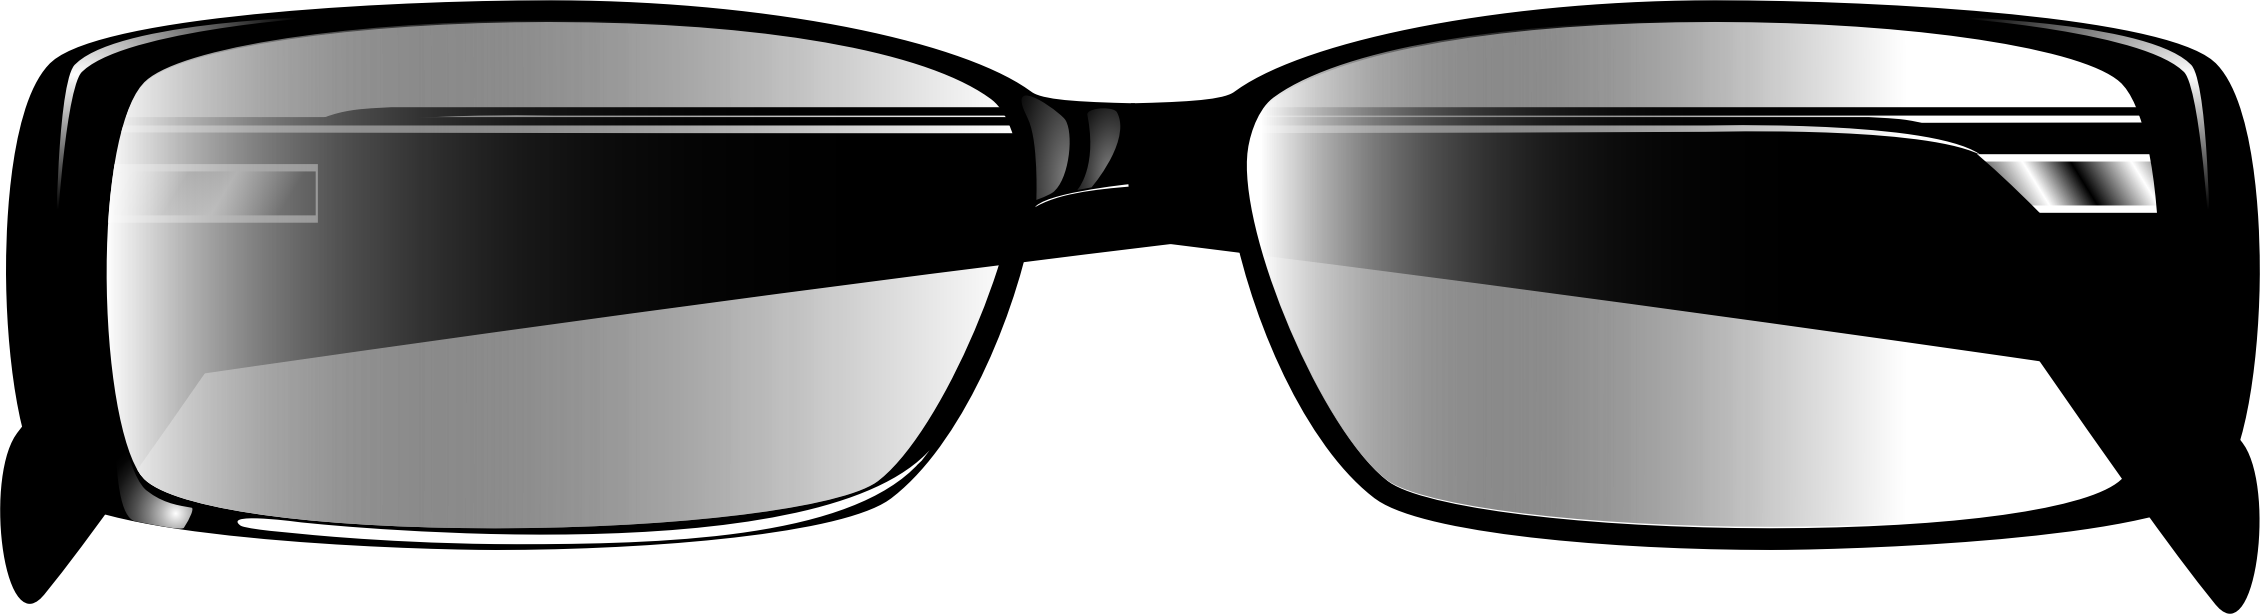 Aviator sunglasses.ai Royalty Free Stock SVG Vector and Clip Art